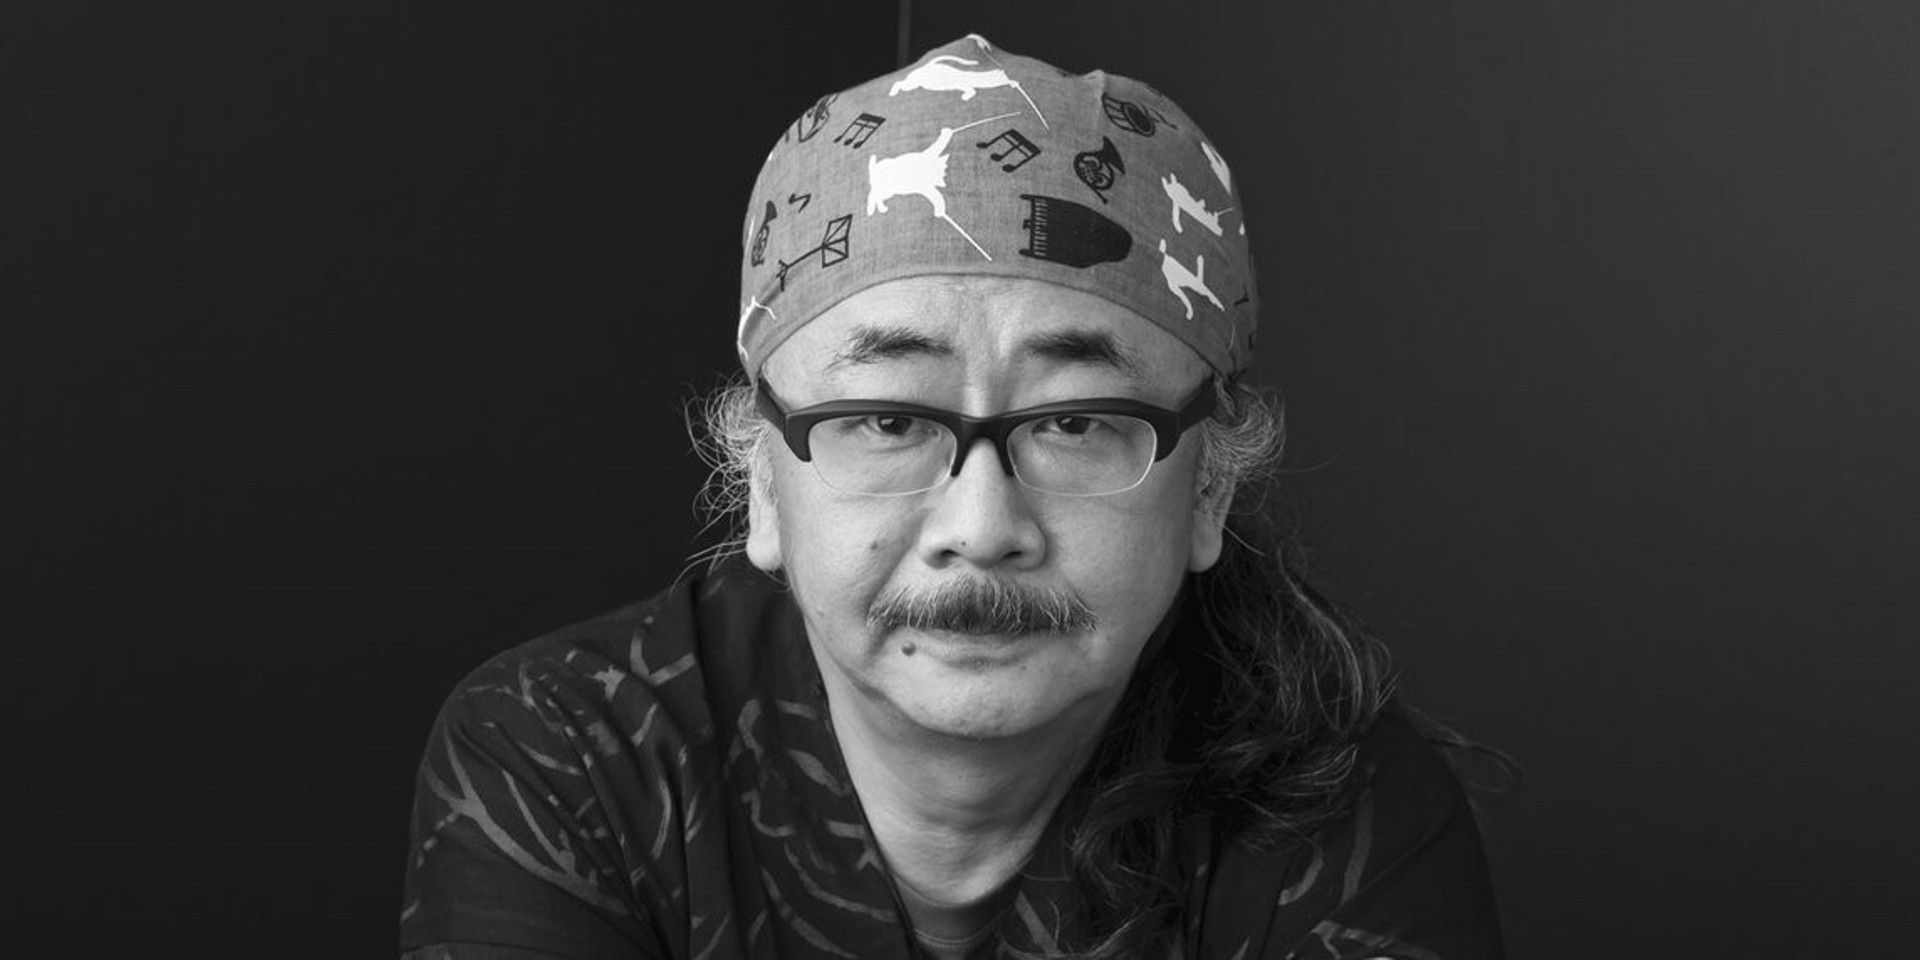 Final Fantasy composer Nobuo Uematsu may have scored his last full soundtrack